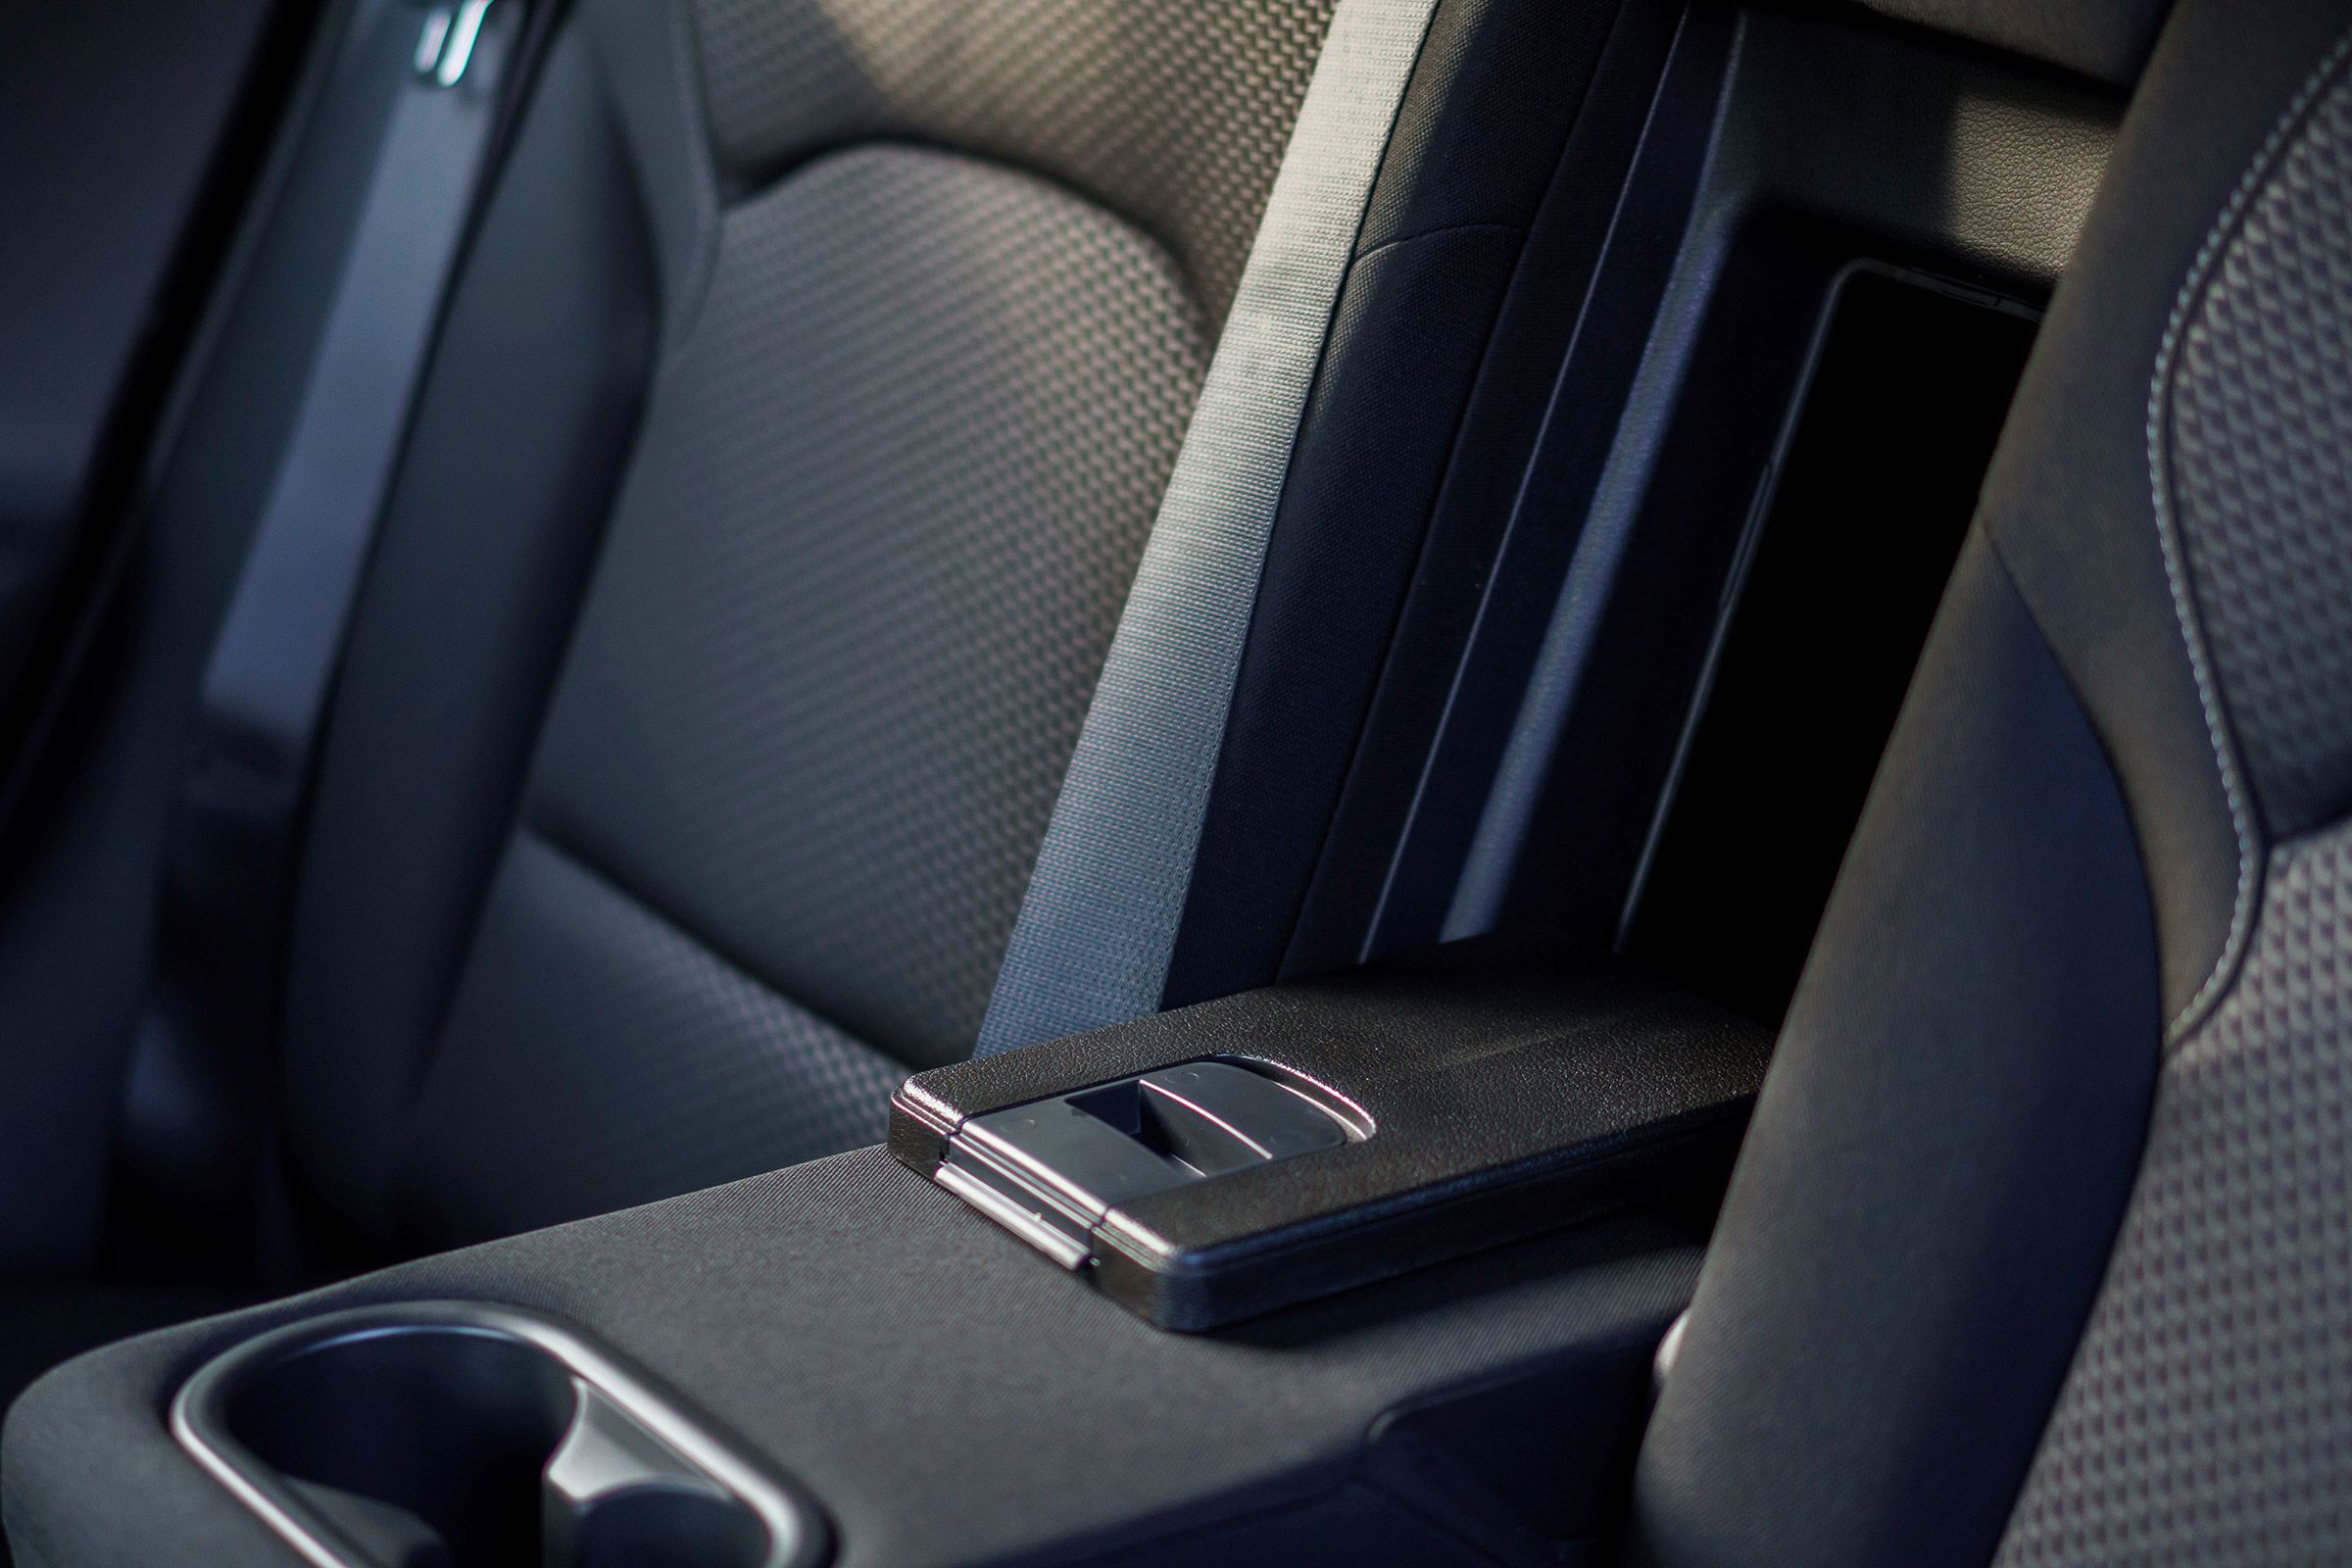 2017 Hyundai I30 Interior Seats Arm Rest (View 17 of 23)